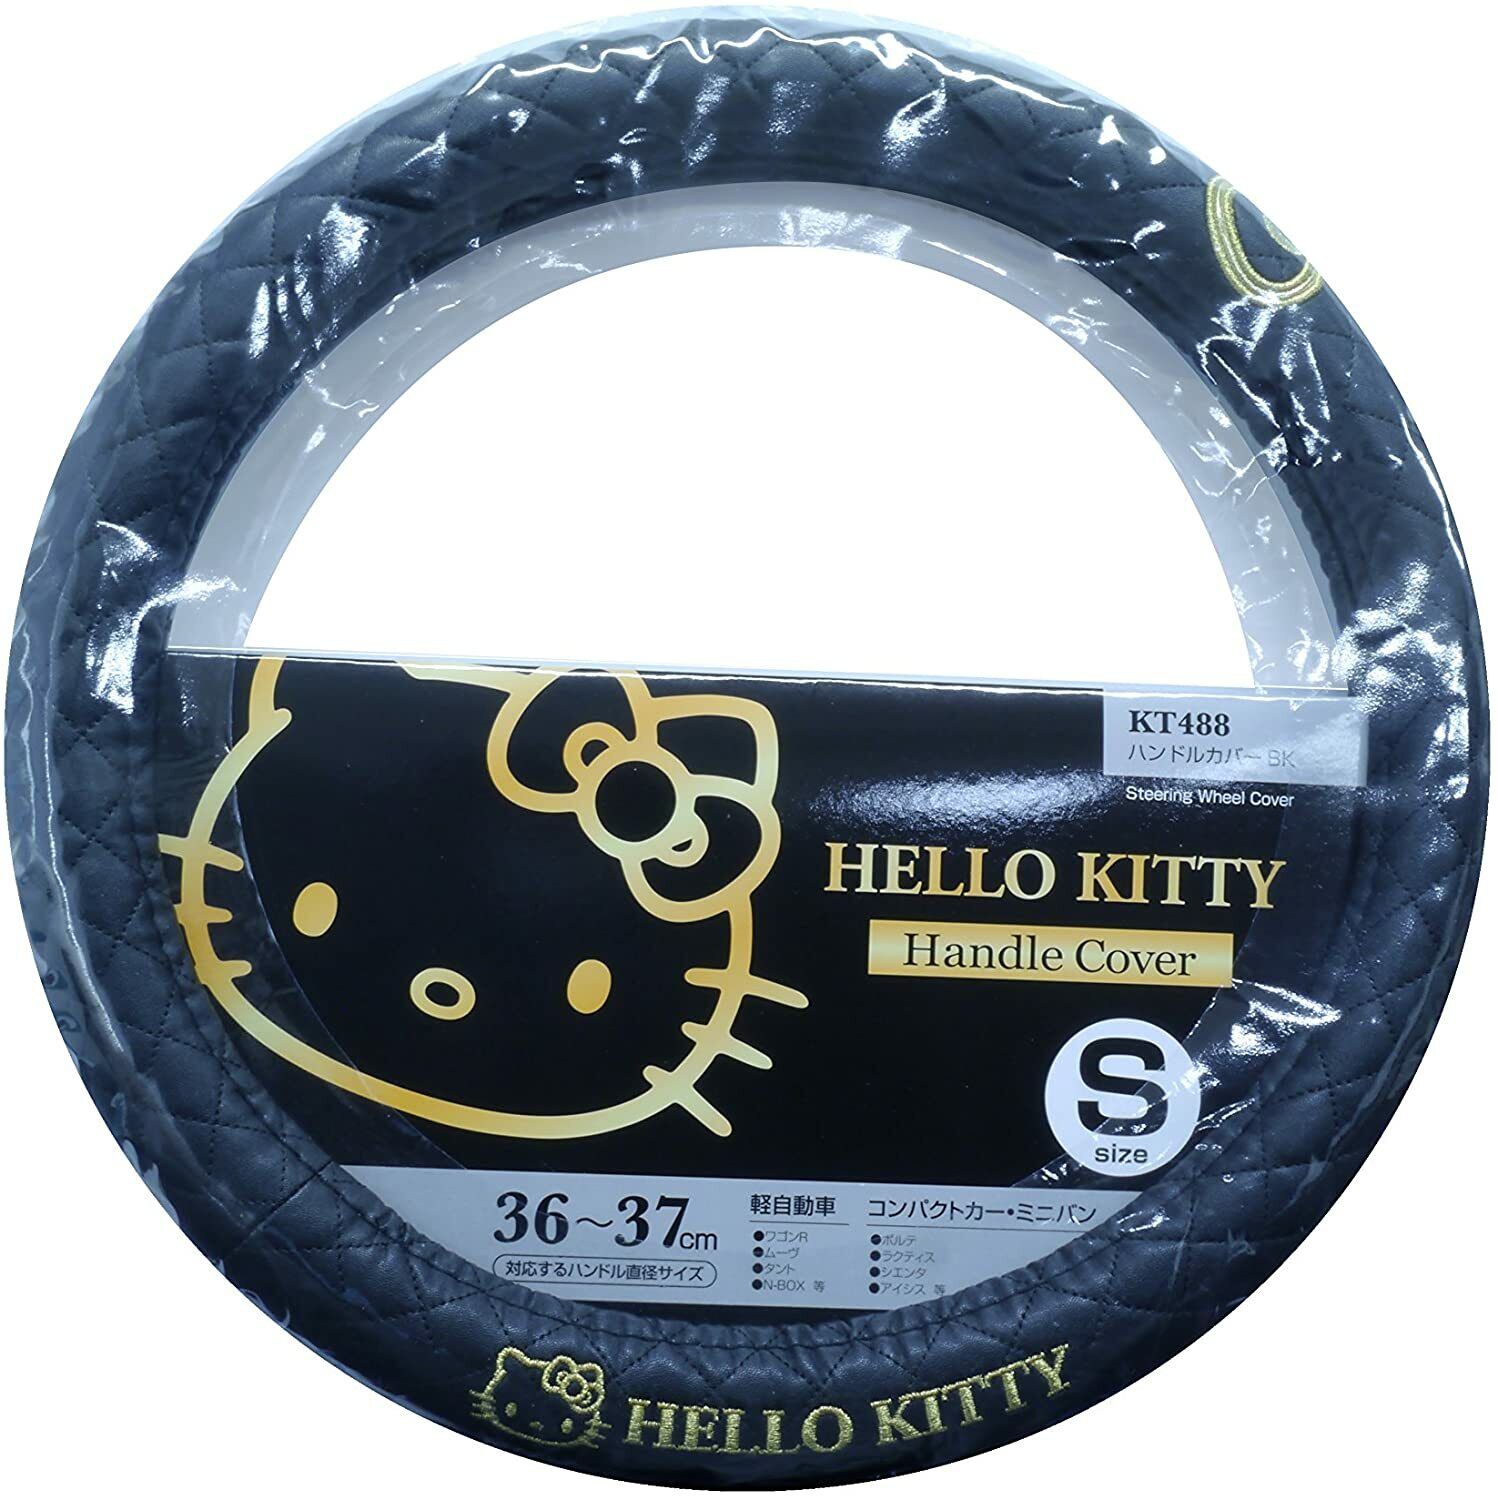 Seiwa Car Handle Cover Hello Kitty KT488 Black & Gold Steering 36 - 37cm Honda 